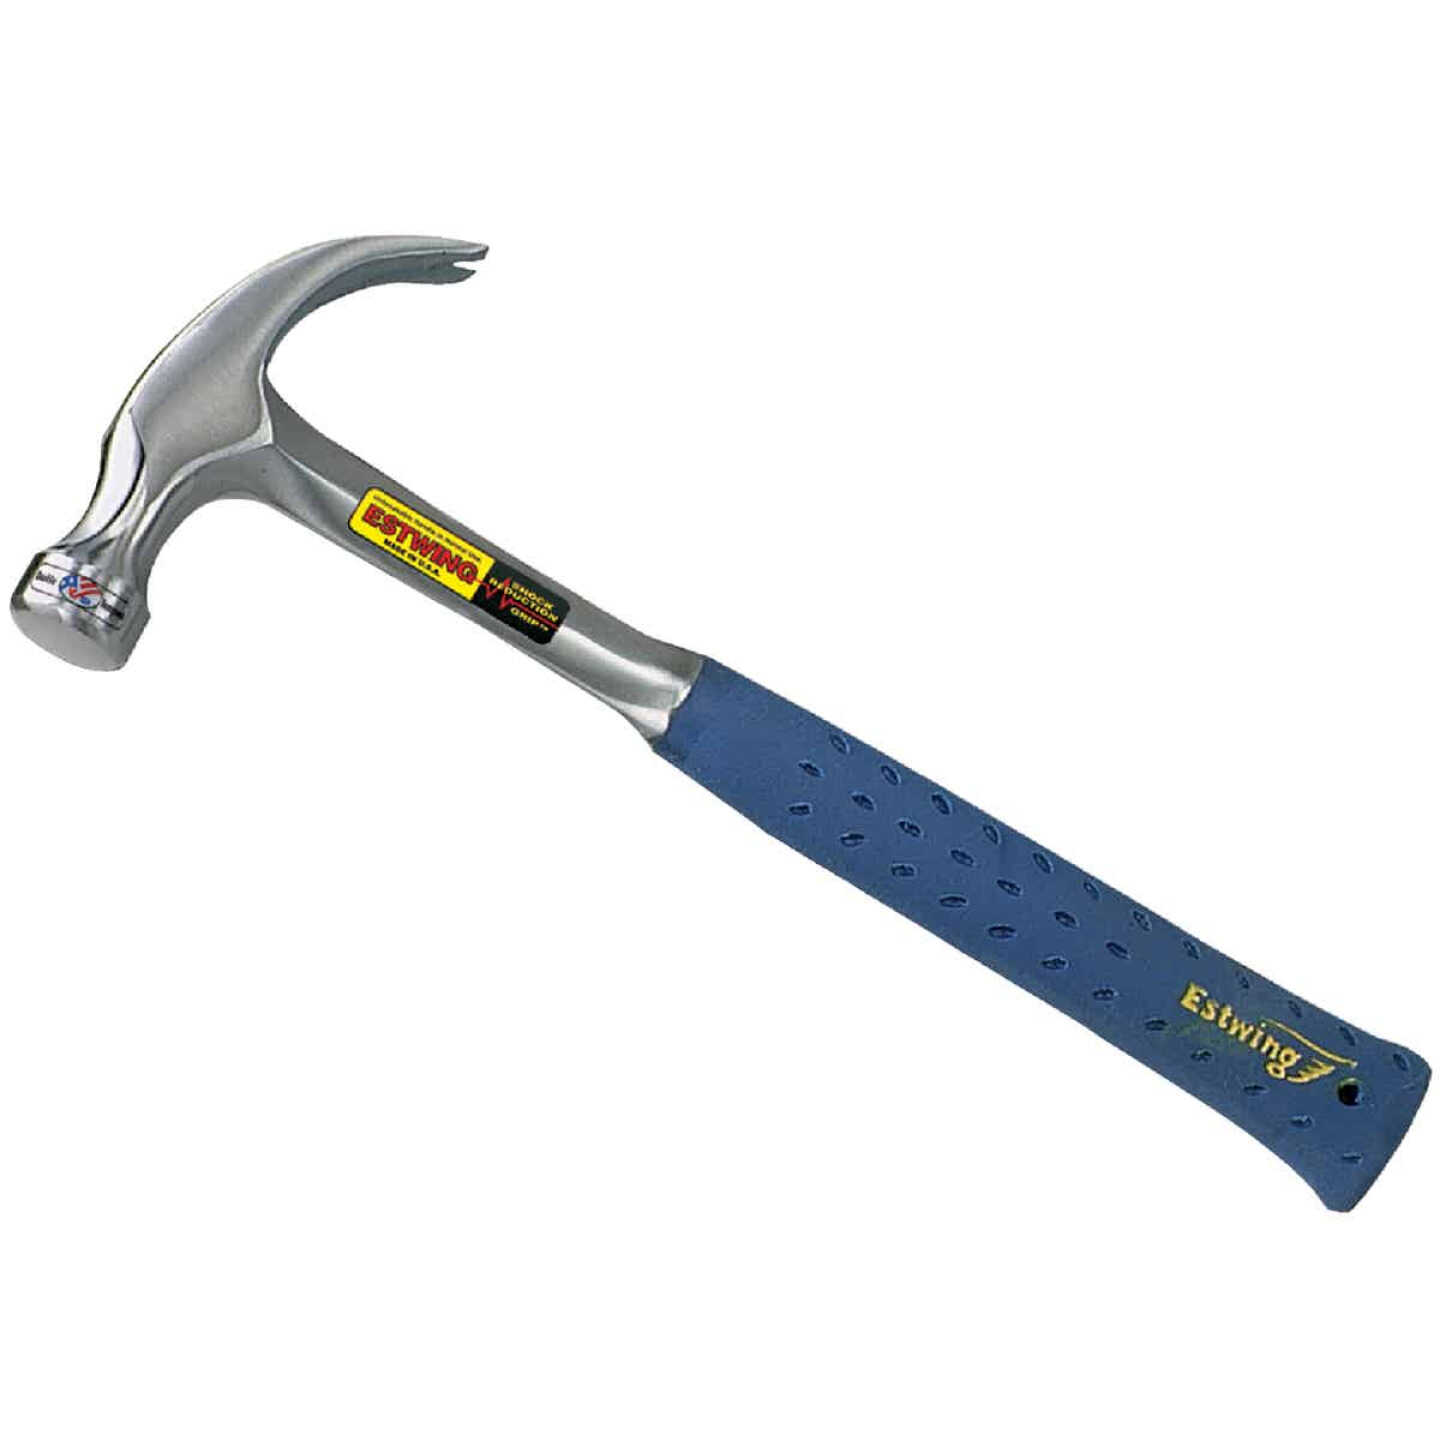 13 oz Curved Claw Wood Handle Hammer